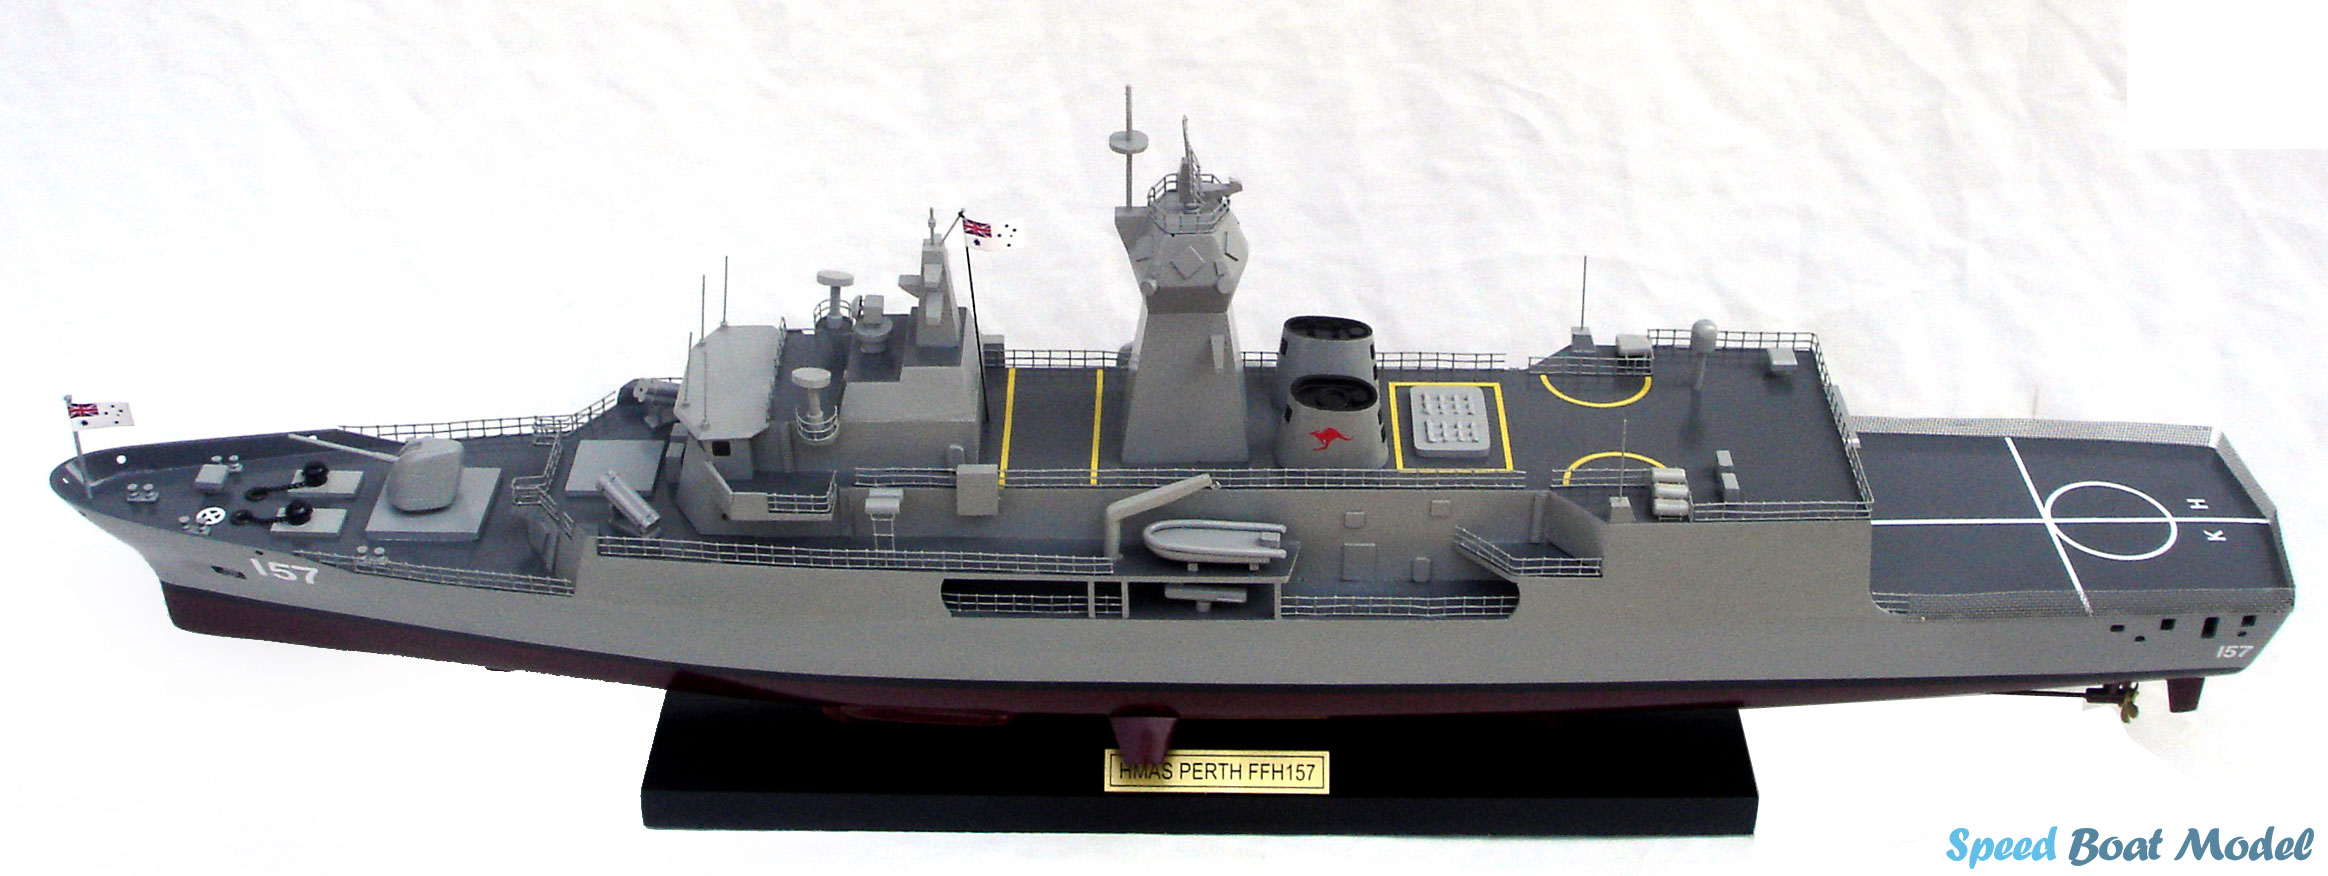 Hmas Perth Ffh 157 Warship Model 31.4"